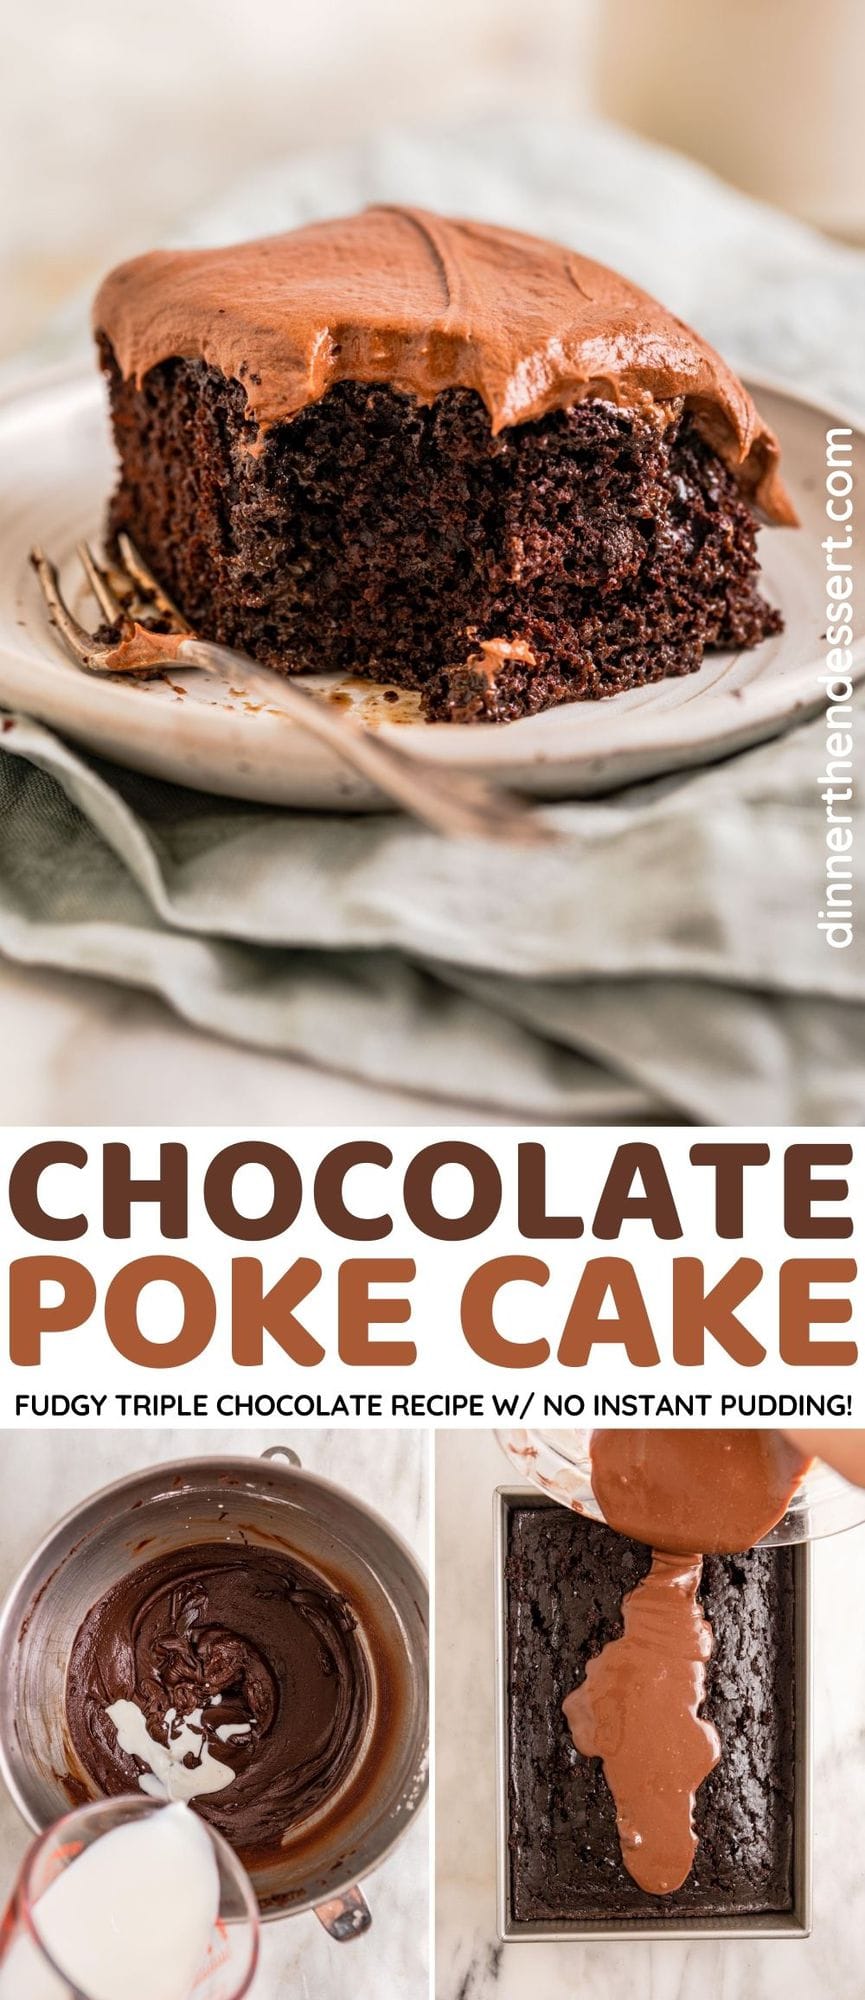 Chocolate Poke Cake Collage